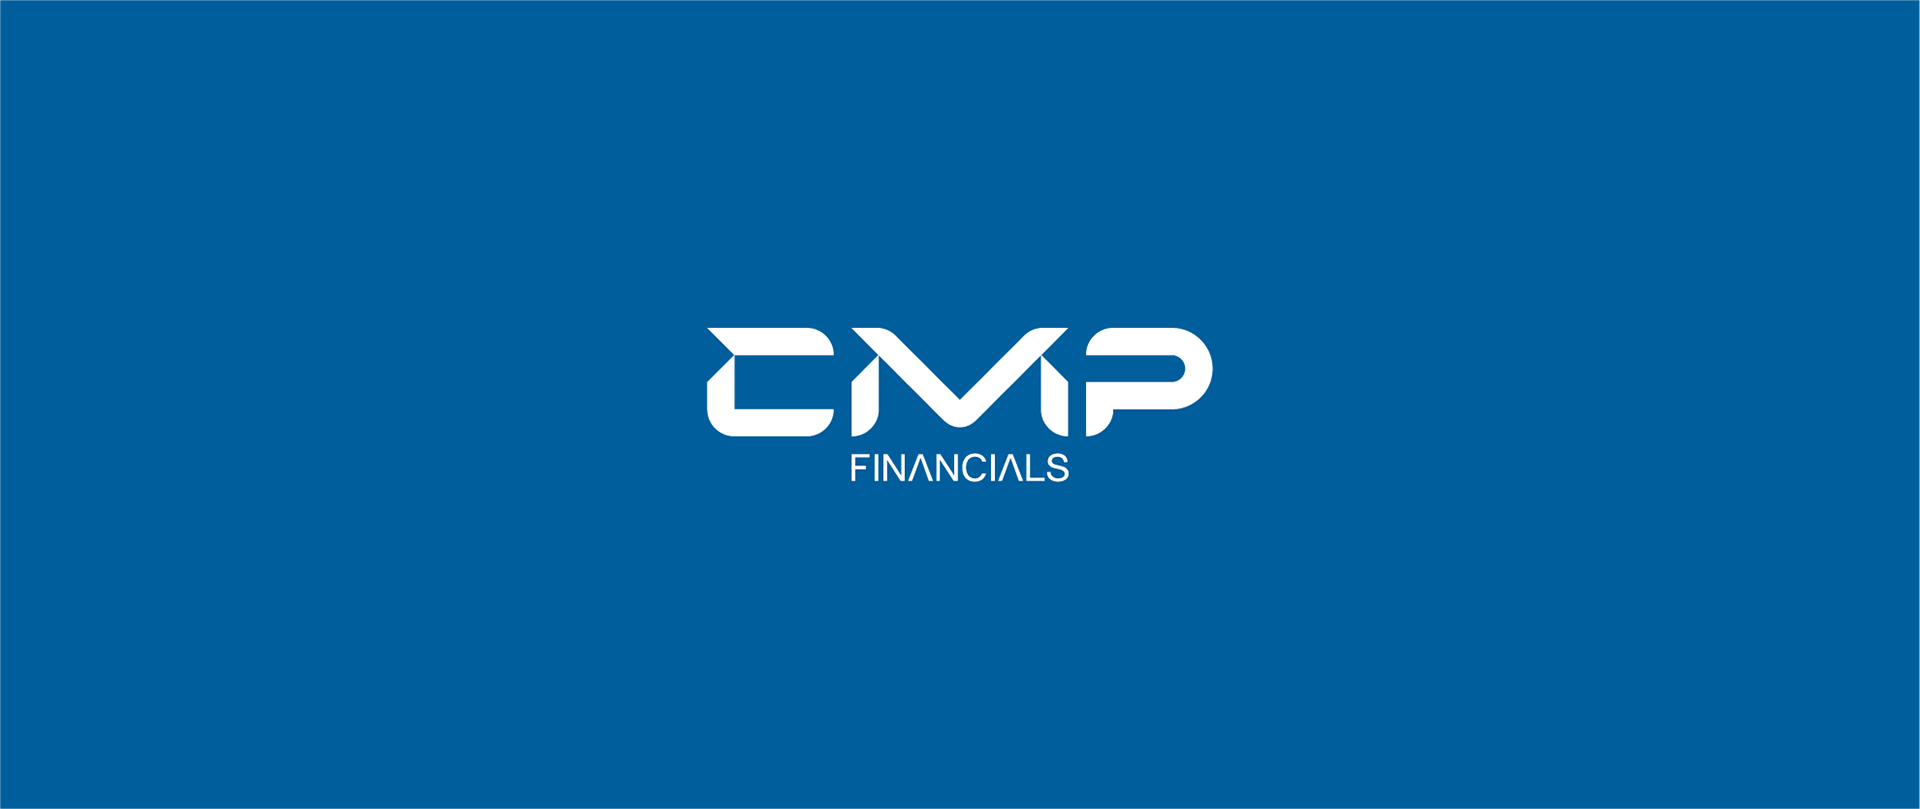 cmp-financials_brandmark_reversed